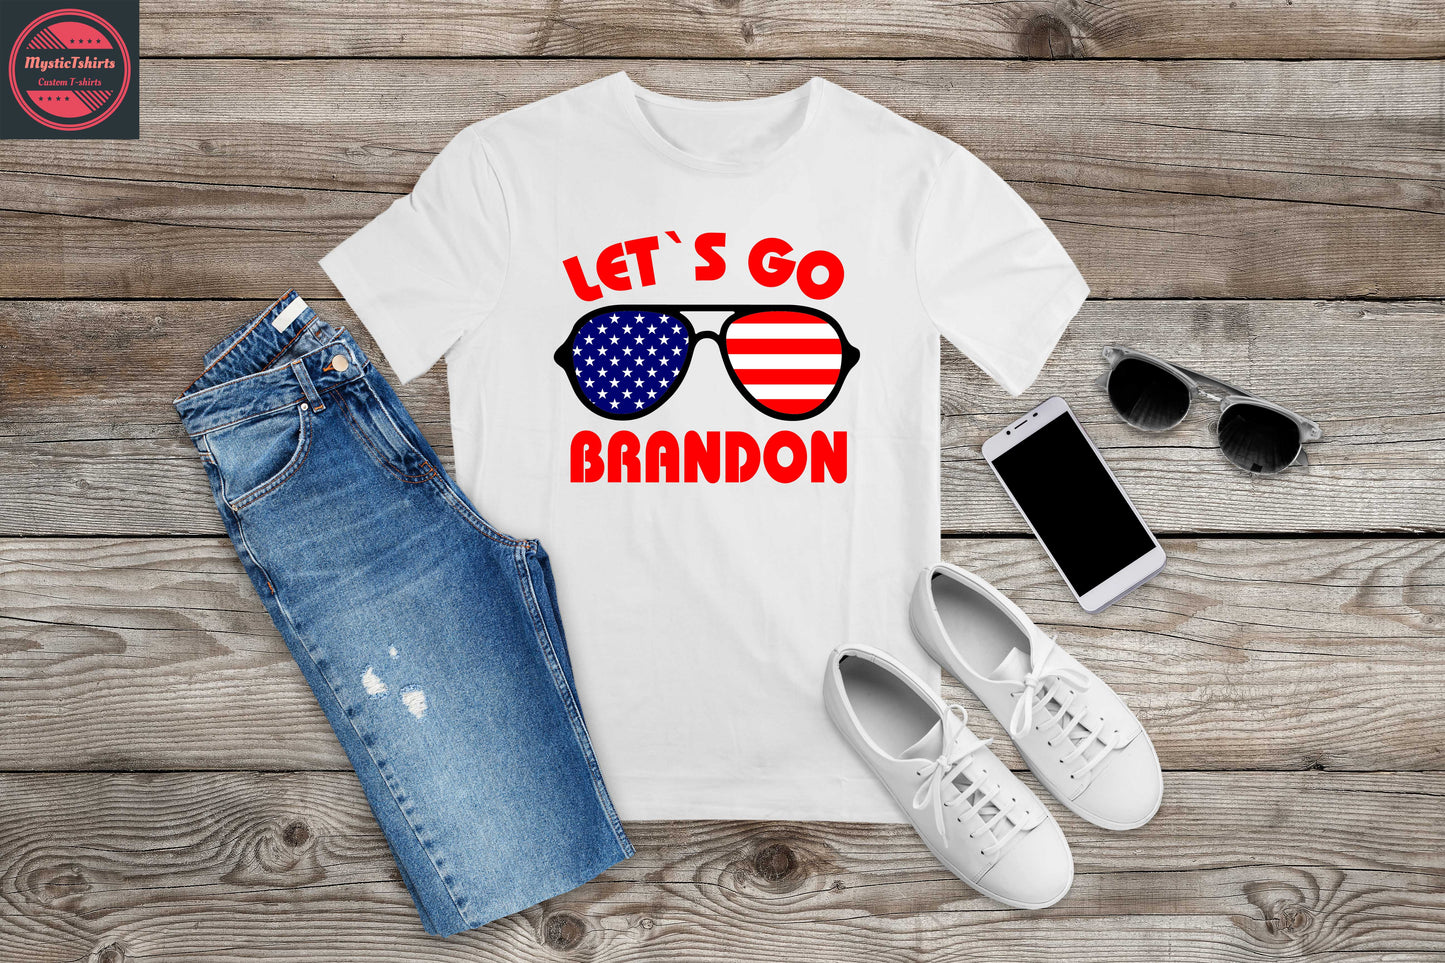 278. LET'S GO BRANDON, Custom Made Shirt, Personalized T-Shirt, Custom Text, Make Your Own Shirt, Custom Tee